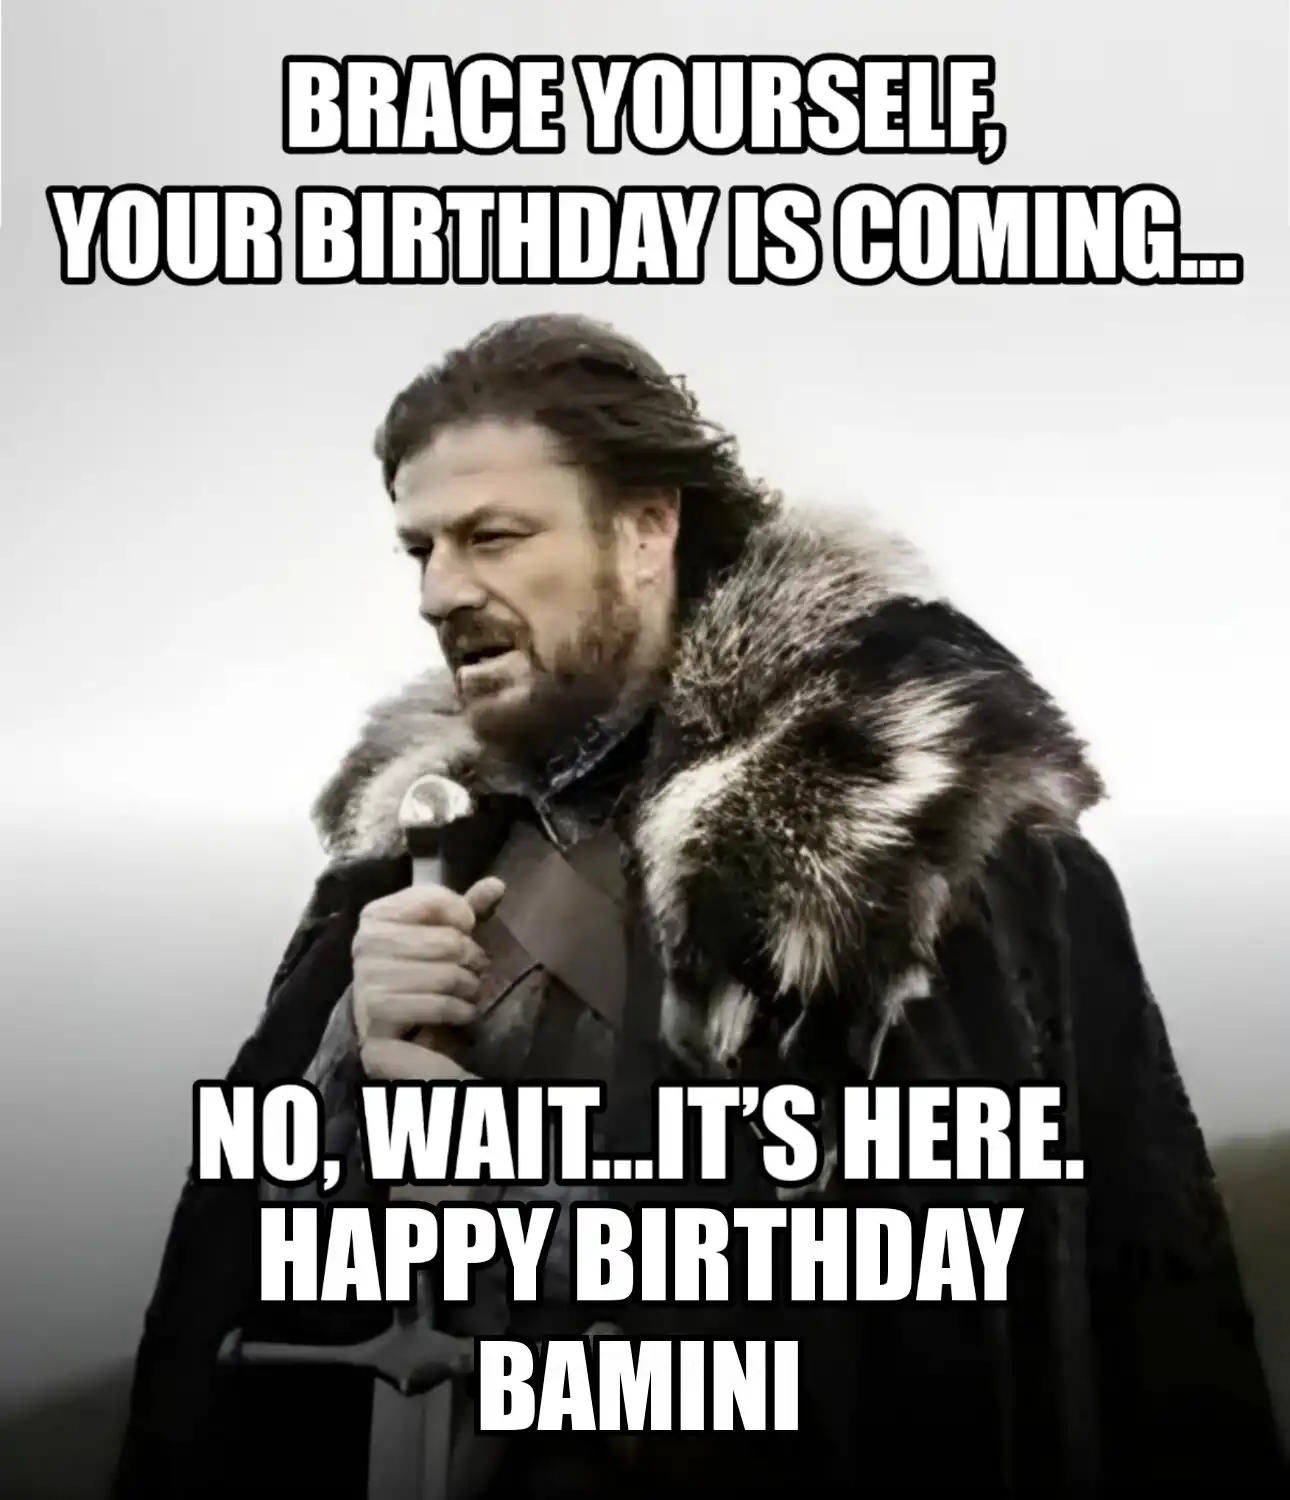 Happy Birthday Bamini Brace Yourself Your Birthday Is Coming Meme